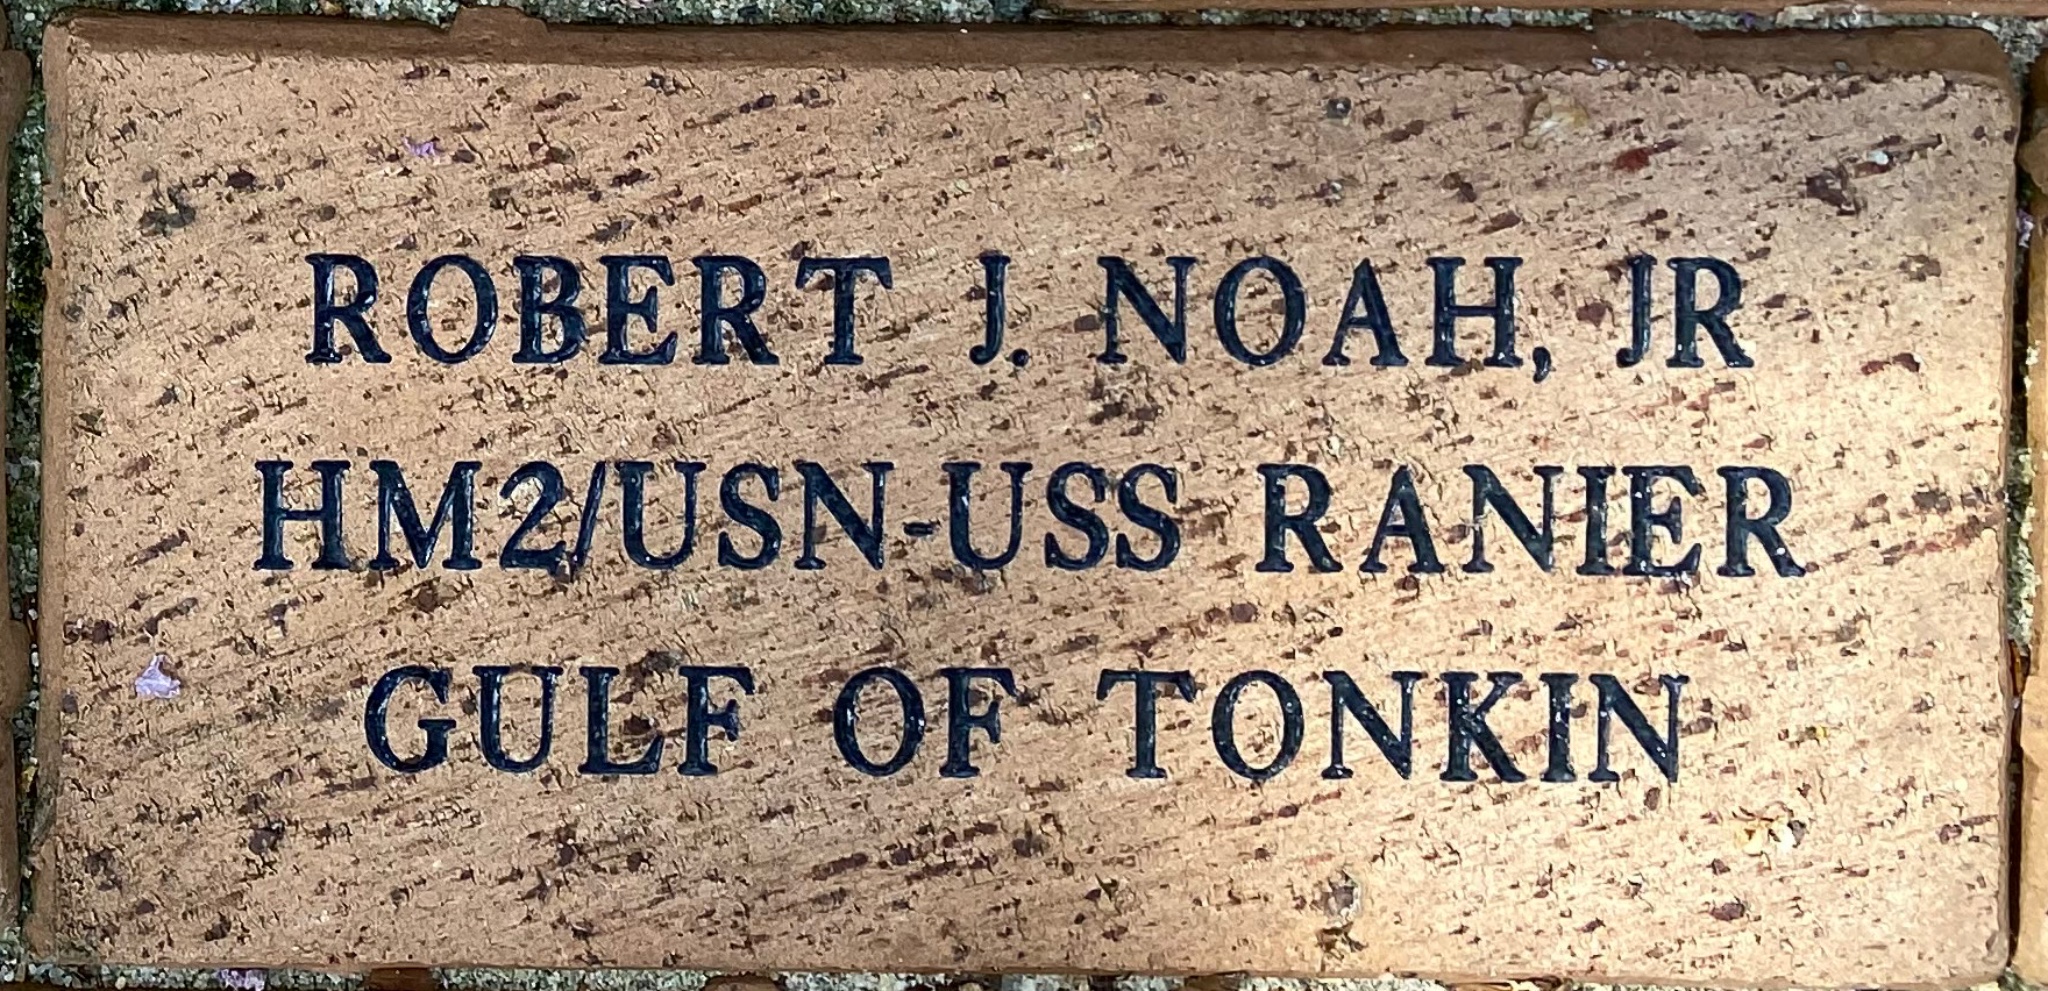 ROBERT J. NOAH, JR HM2/USN-USS RANIER GULF OF TONKIN